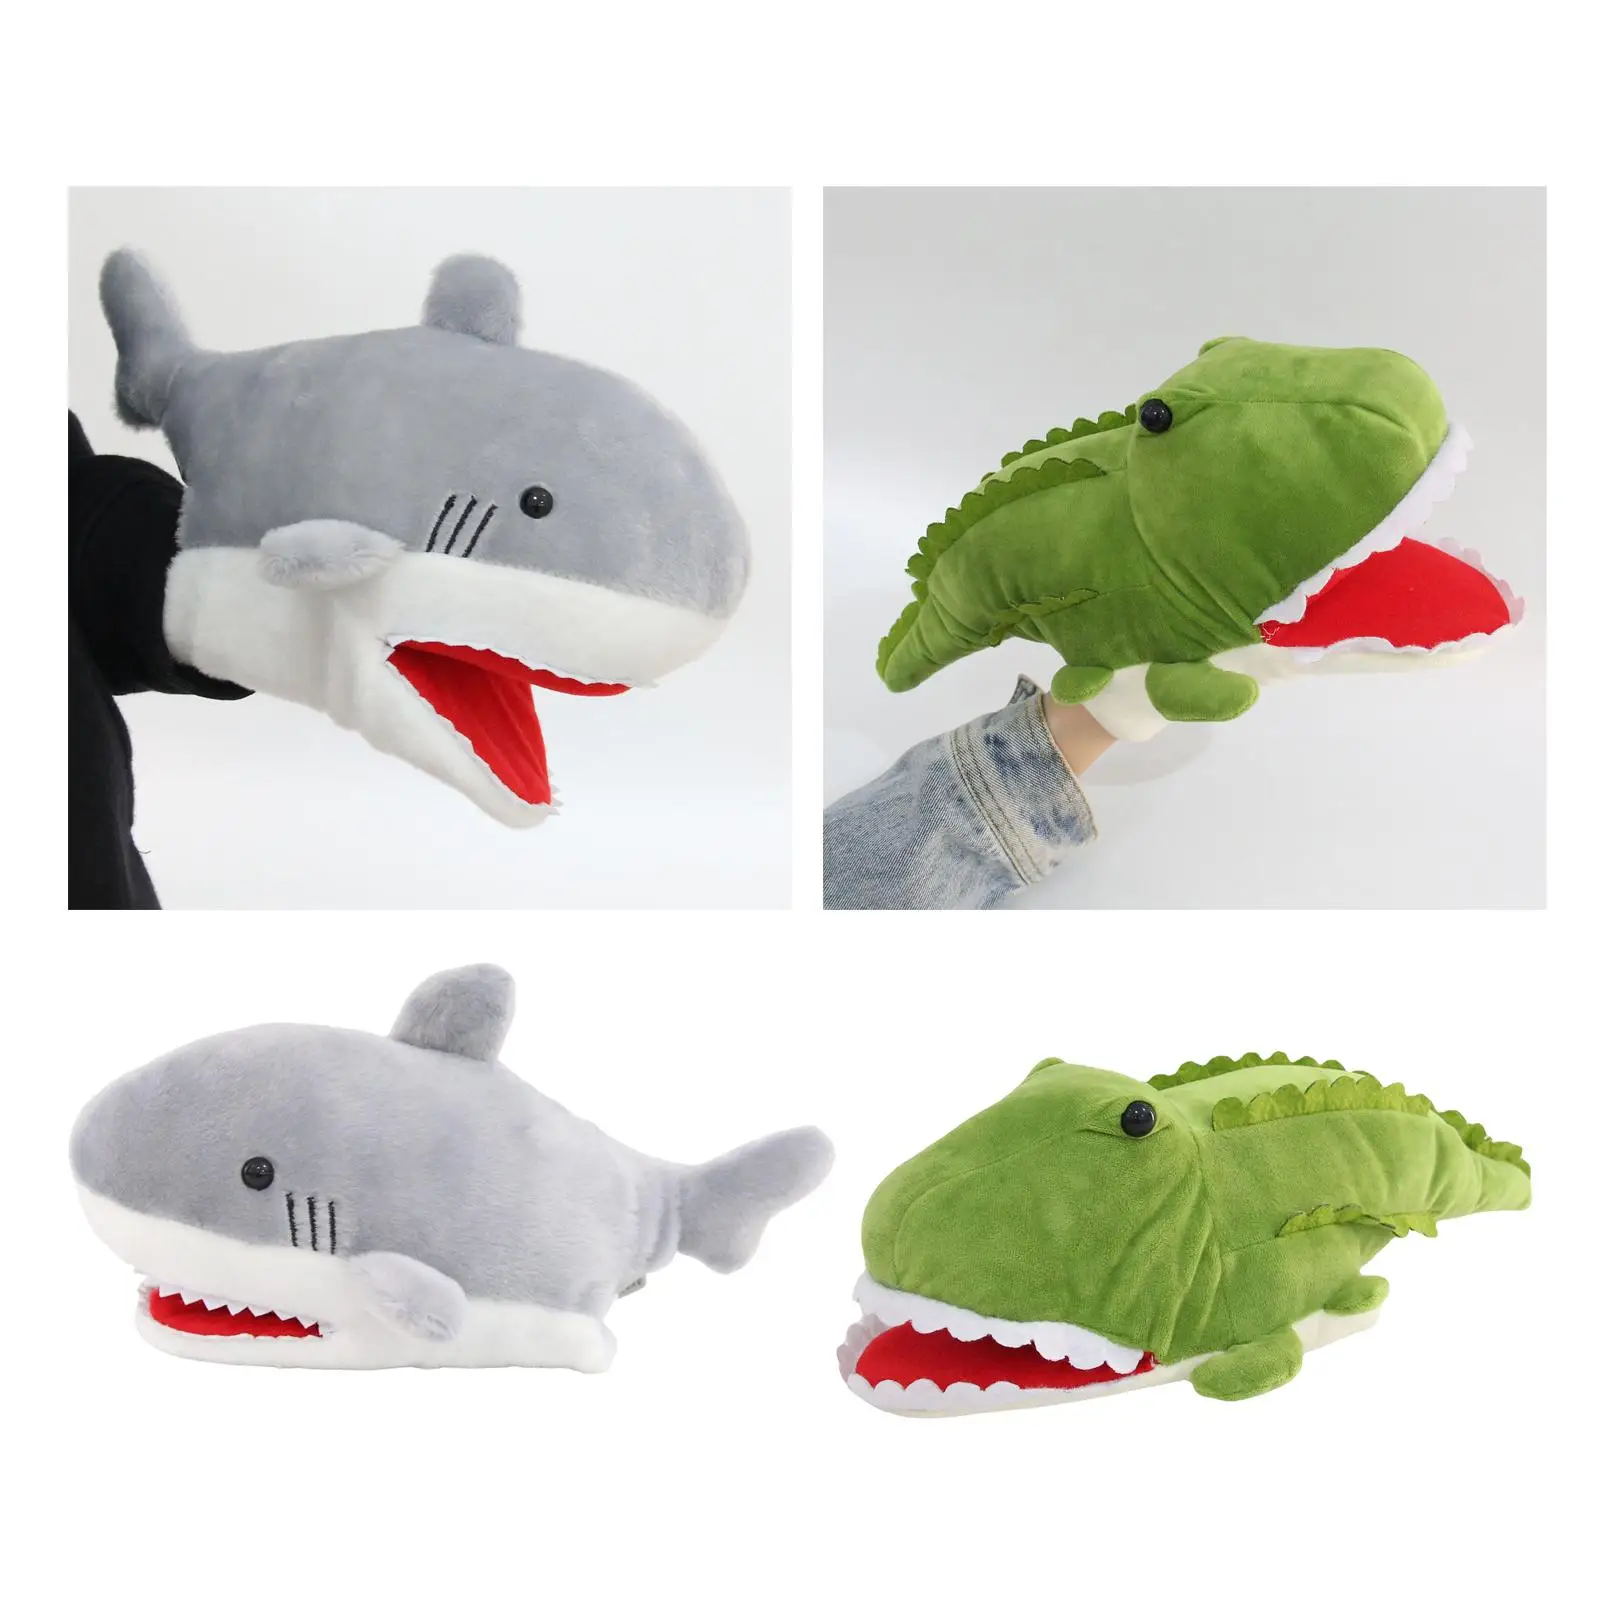 Animal Hand Puppets Kids Toys Gift Role Play Head Gloves Gag Jokes Stuffed Animal Toy for Storytelling Imaginative Preschool